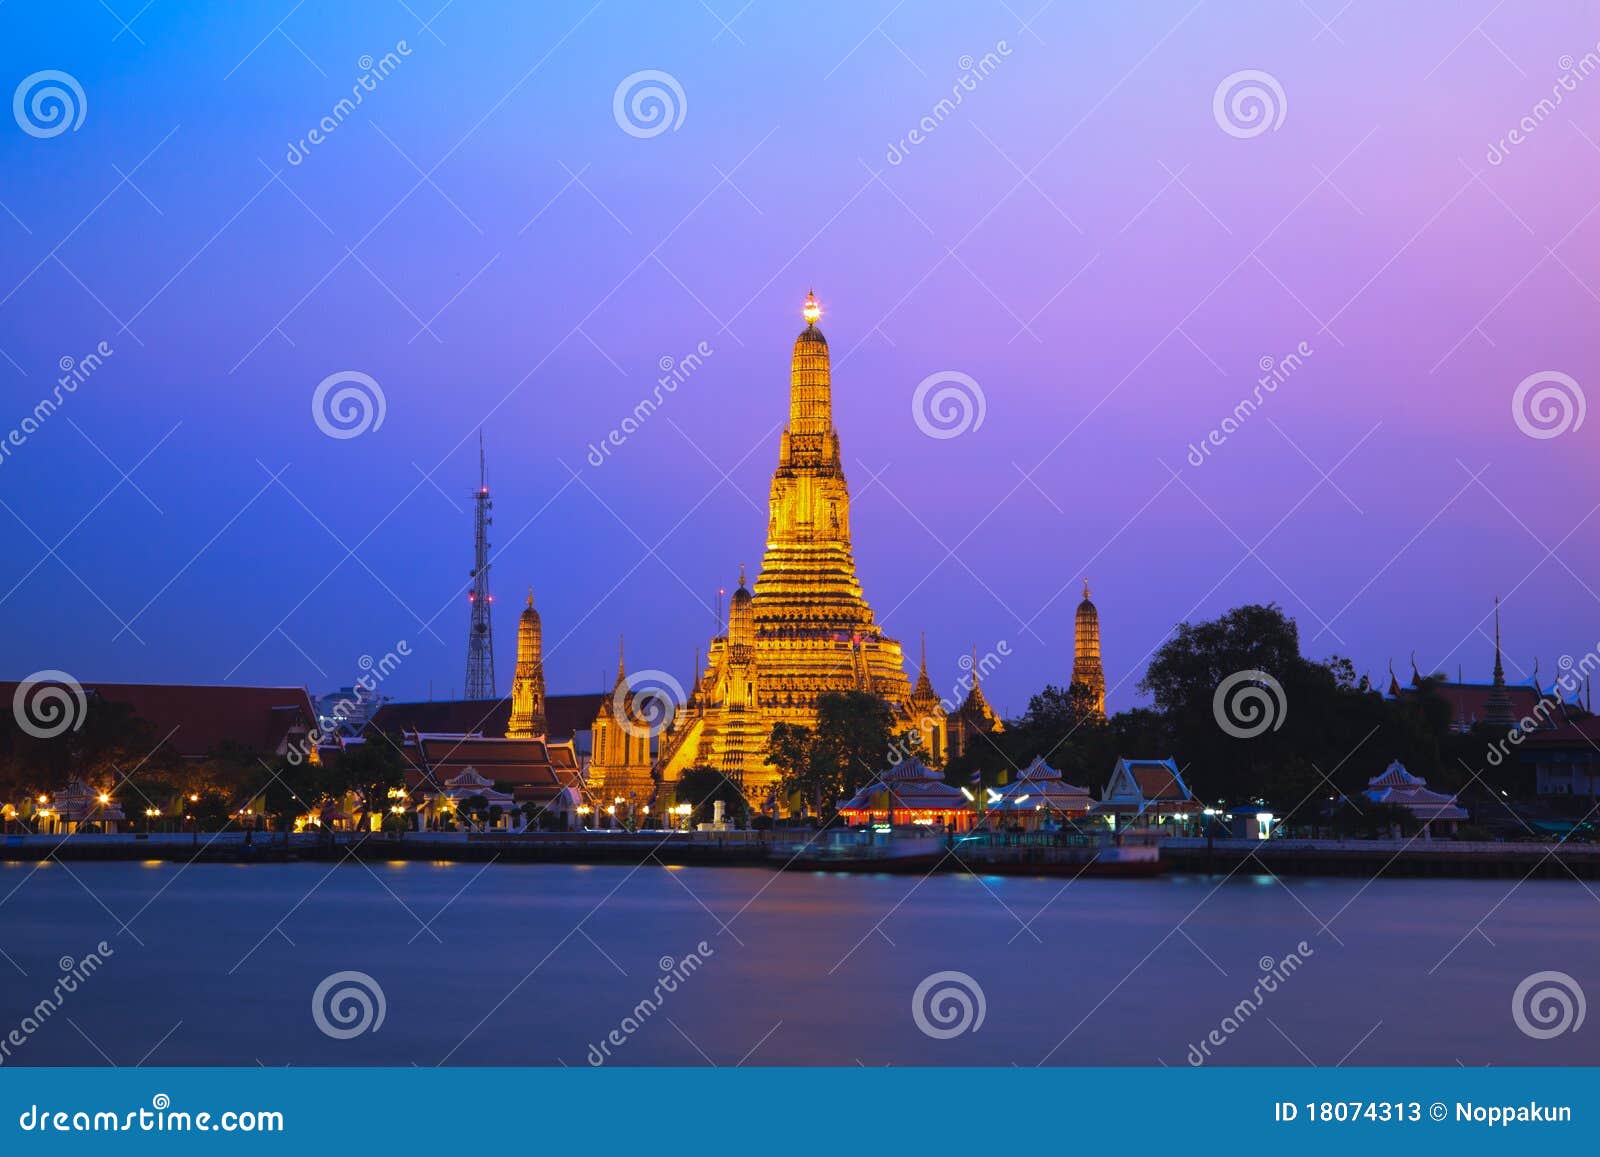 wat arun, the temple of dawn, at twilight bangkok